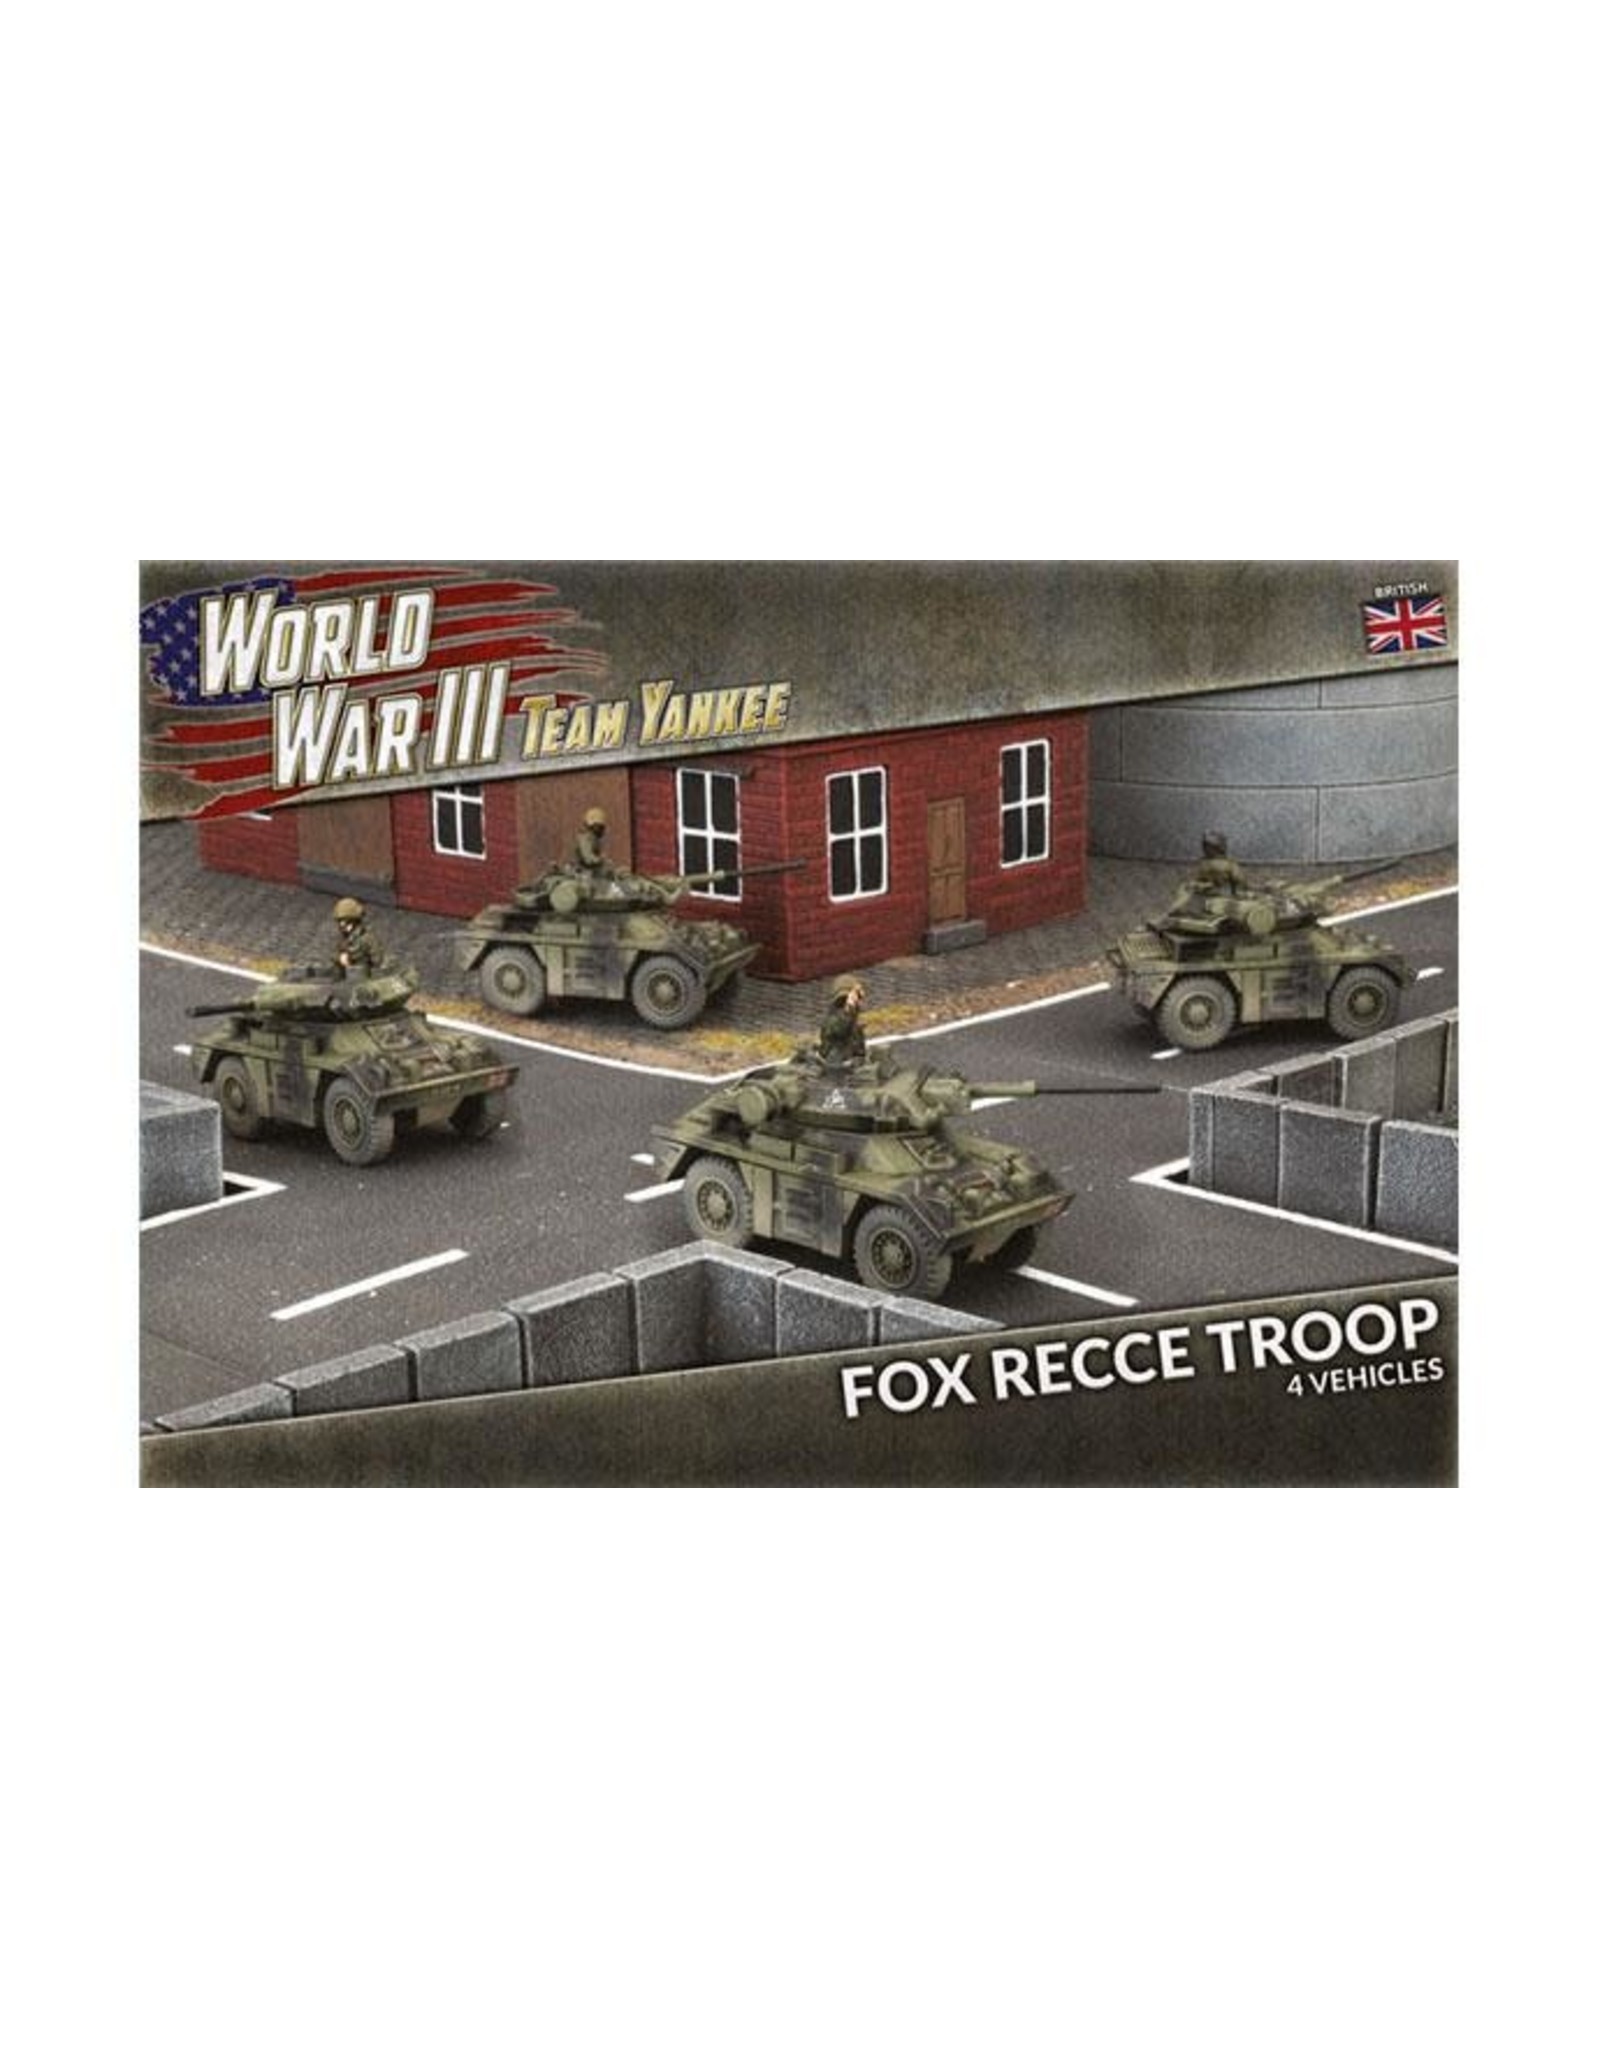 Battlefront Miniatures Team Yankee: Fox Recce Troop